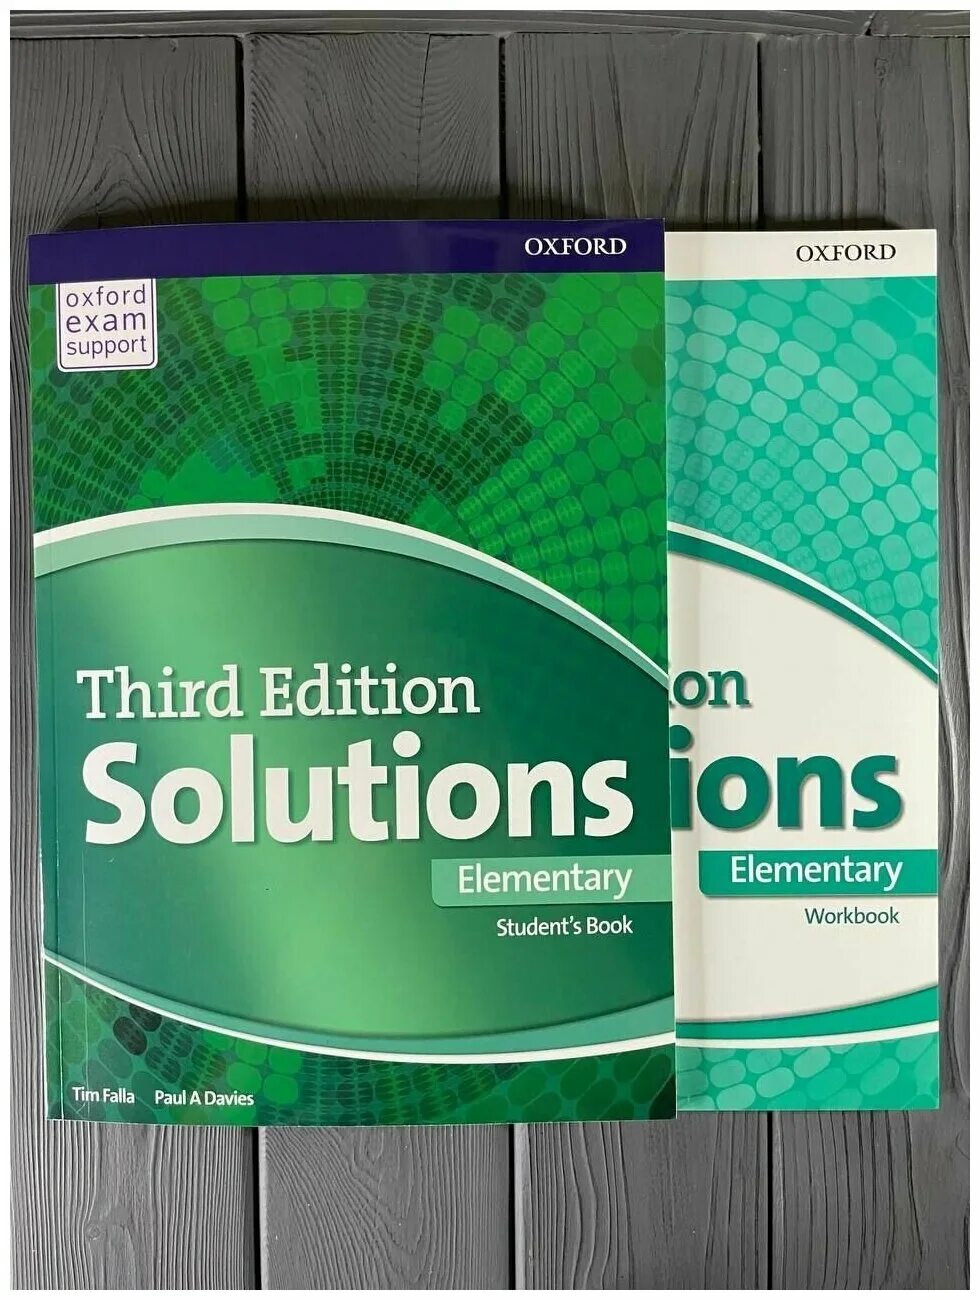 Английский язык учебник solutions elementary. Solutions Elementary 3rd Edition. Учебник solutions Elementary 3 Edition. Third Edition solutions Elementary. Oxford solutions Elementary.